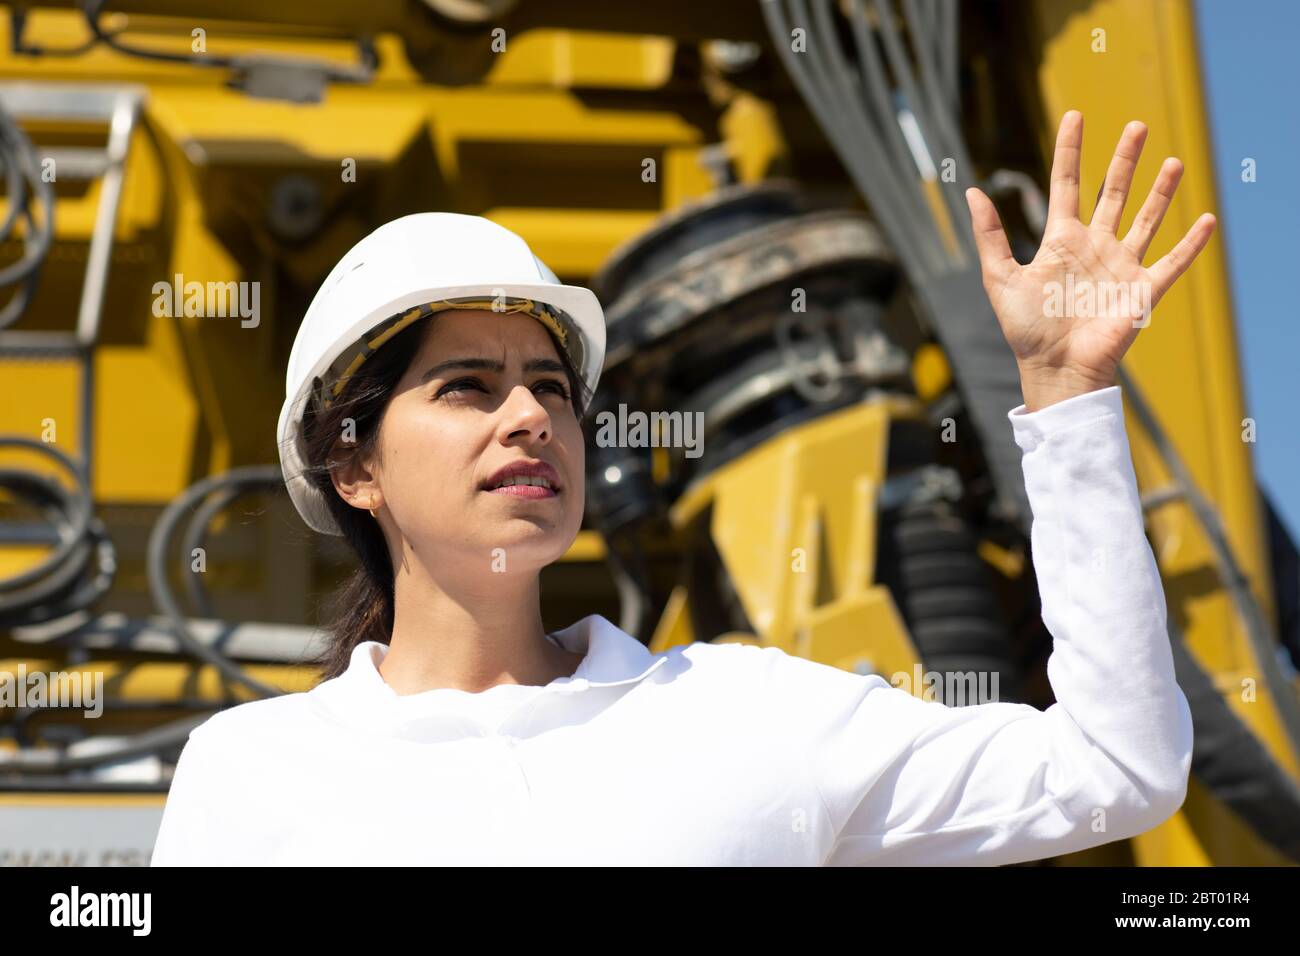 Female architect wearing white hard hat working on construction site. Stock Photo